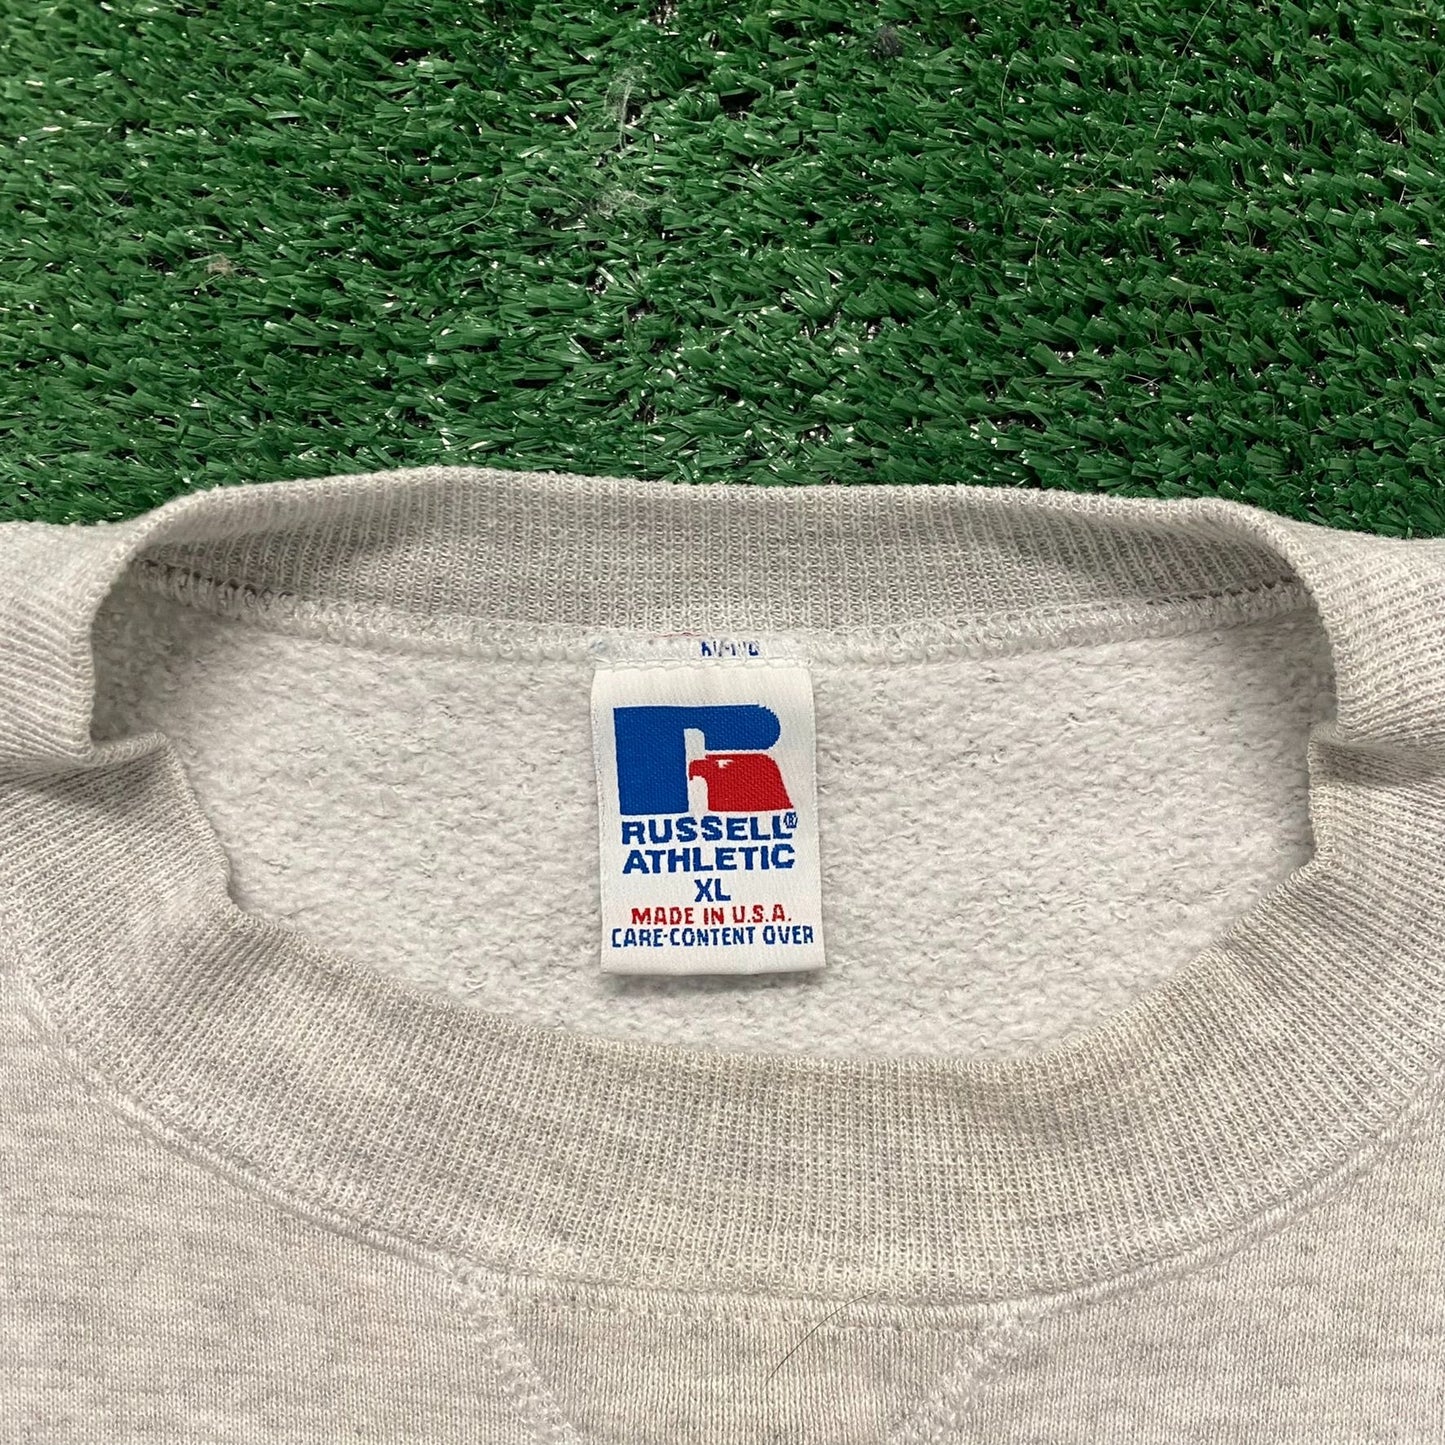 Vintage 90s Blue Mountain Essential Crewneck Sweatshirt